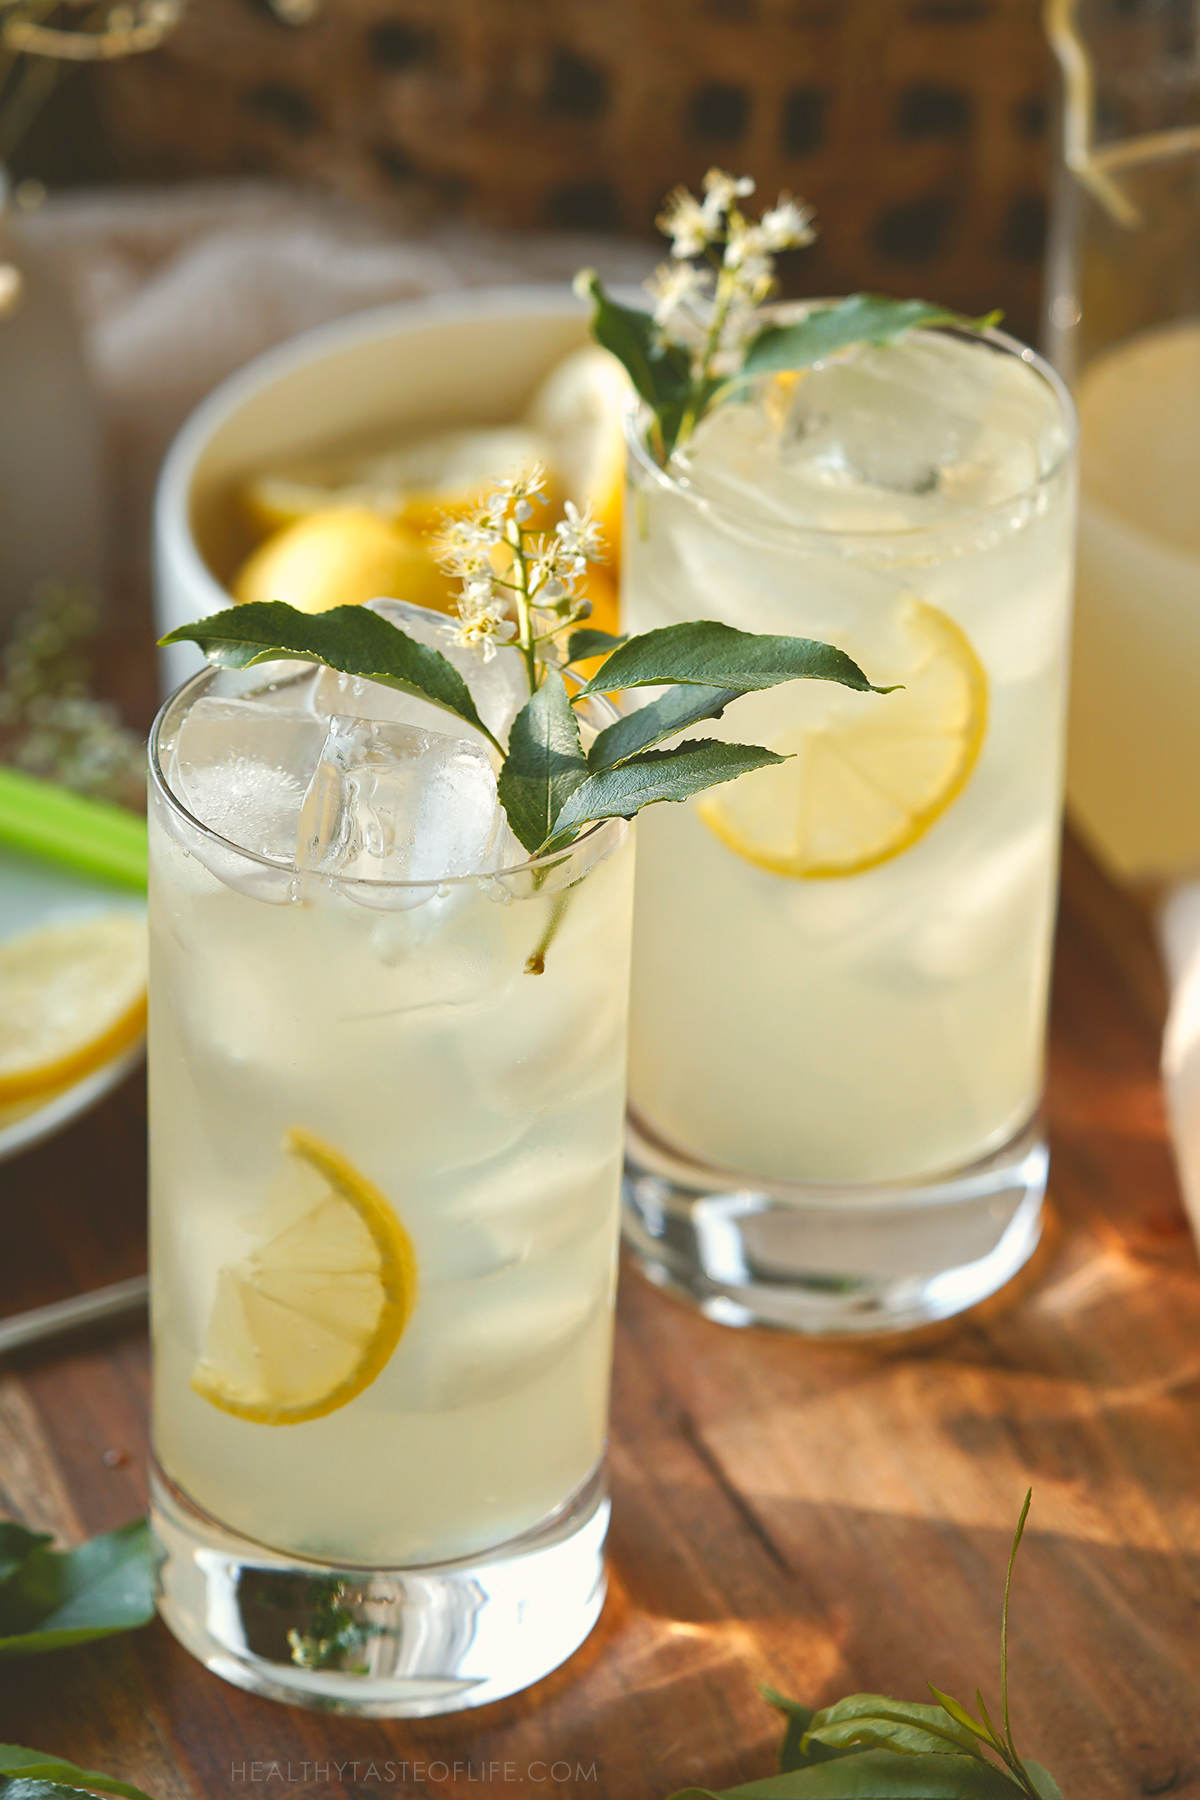 Photo of two high glasses filled with homemade elderflower lemonade served over ice.